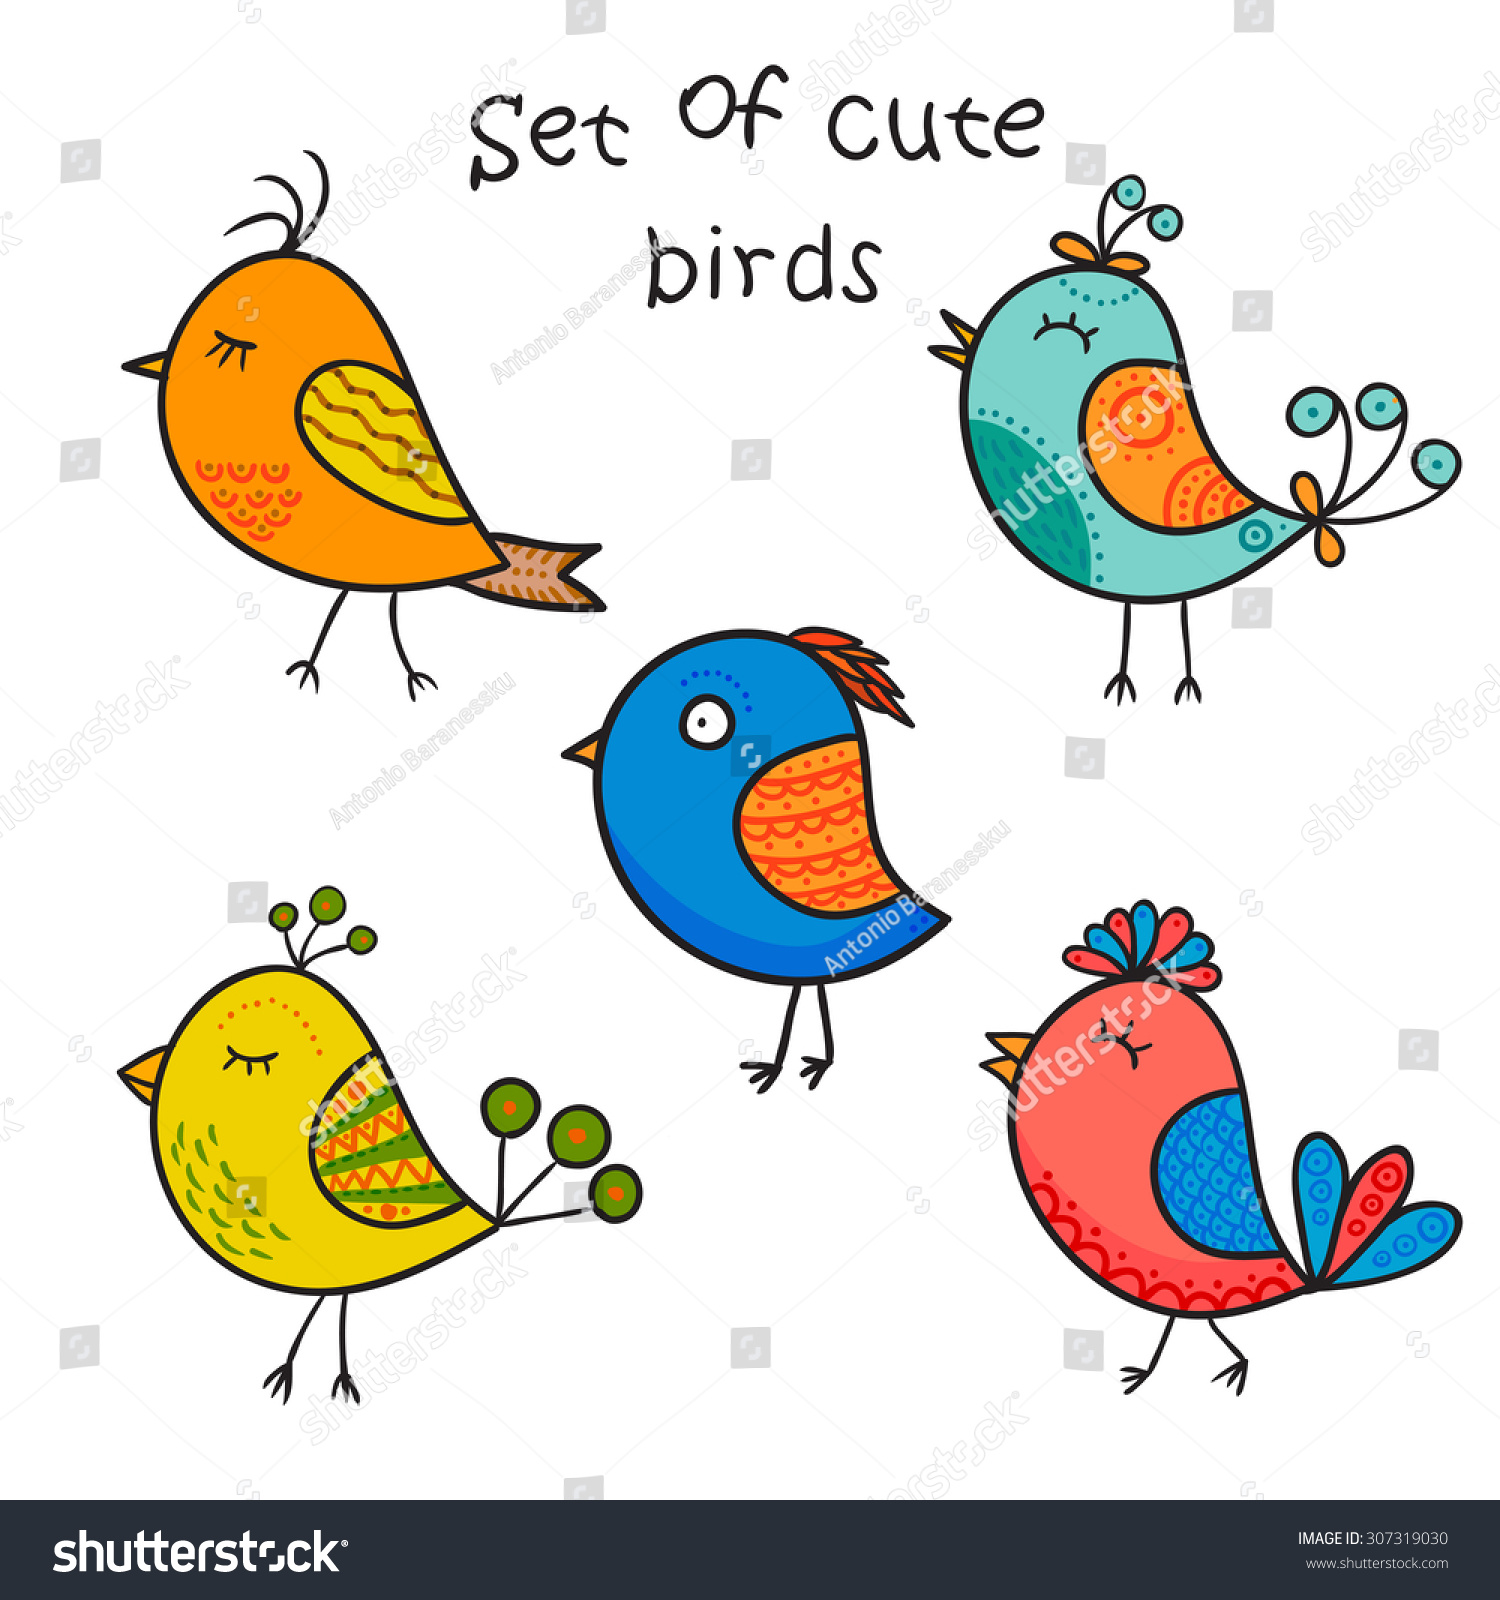 COVASA Mens Summer ShortsCartoon Style Funny Avian Animals Design with Colorfu